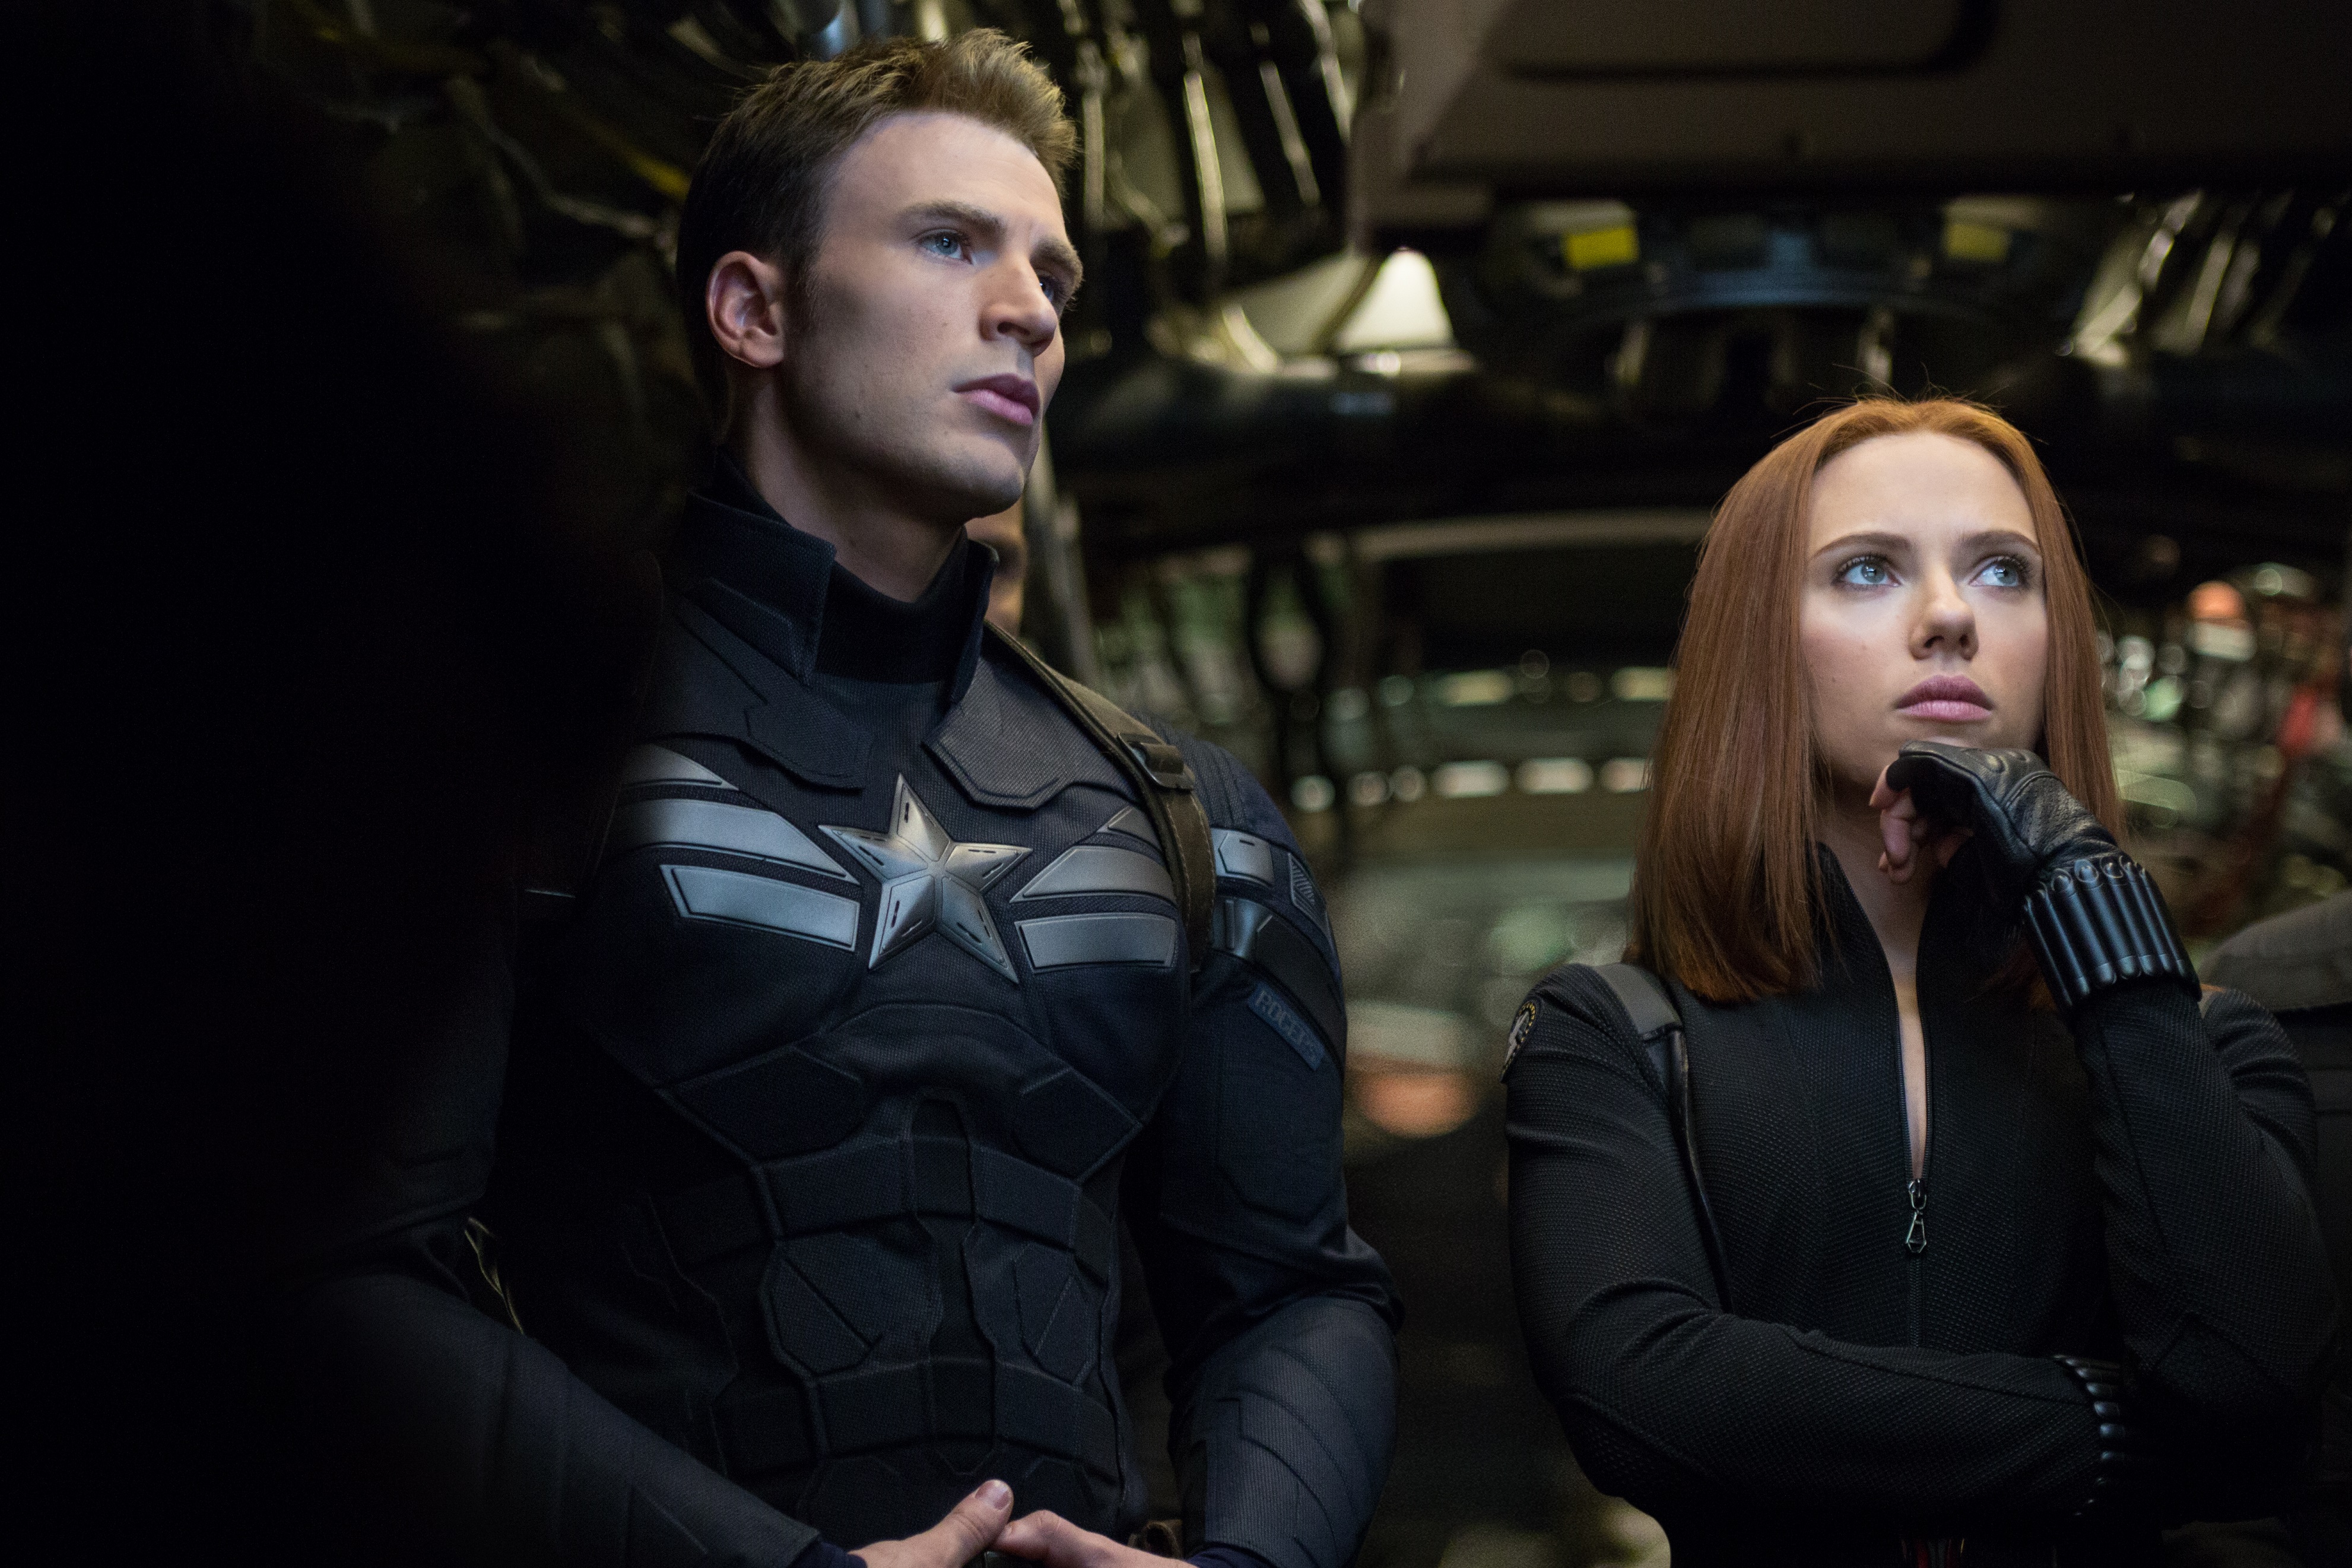 Captain America/Steve Rogers (Chris Evans) and Black Widow/Natasha Romanoff (Scarlett Johansson) in Captain America: The Winter Soldier.